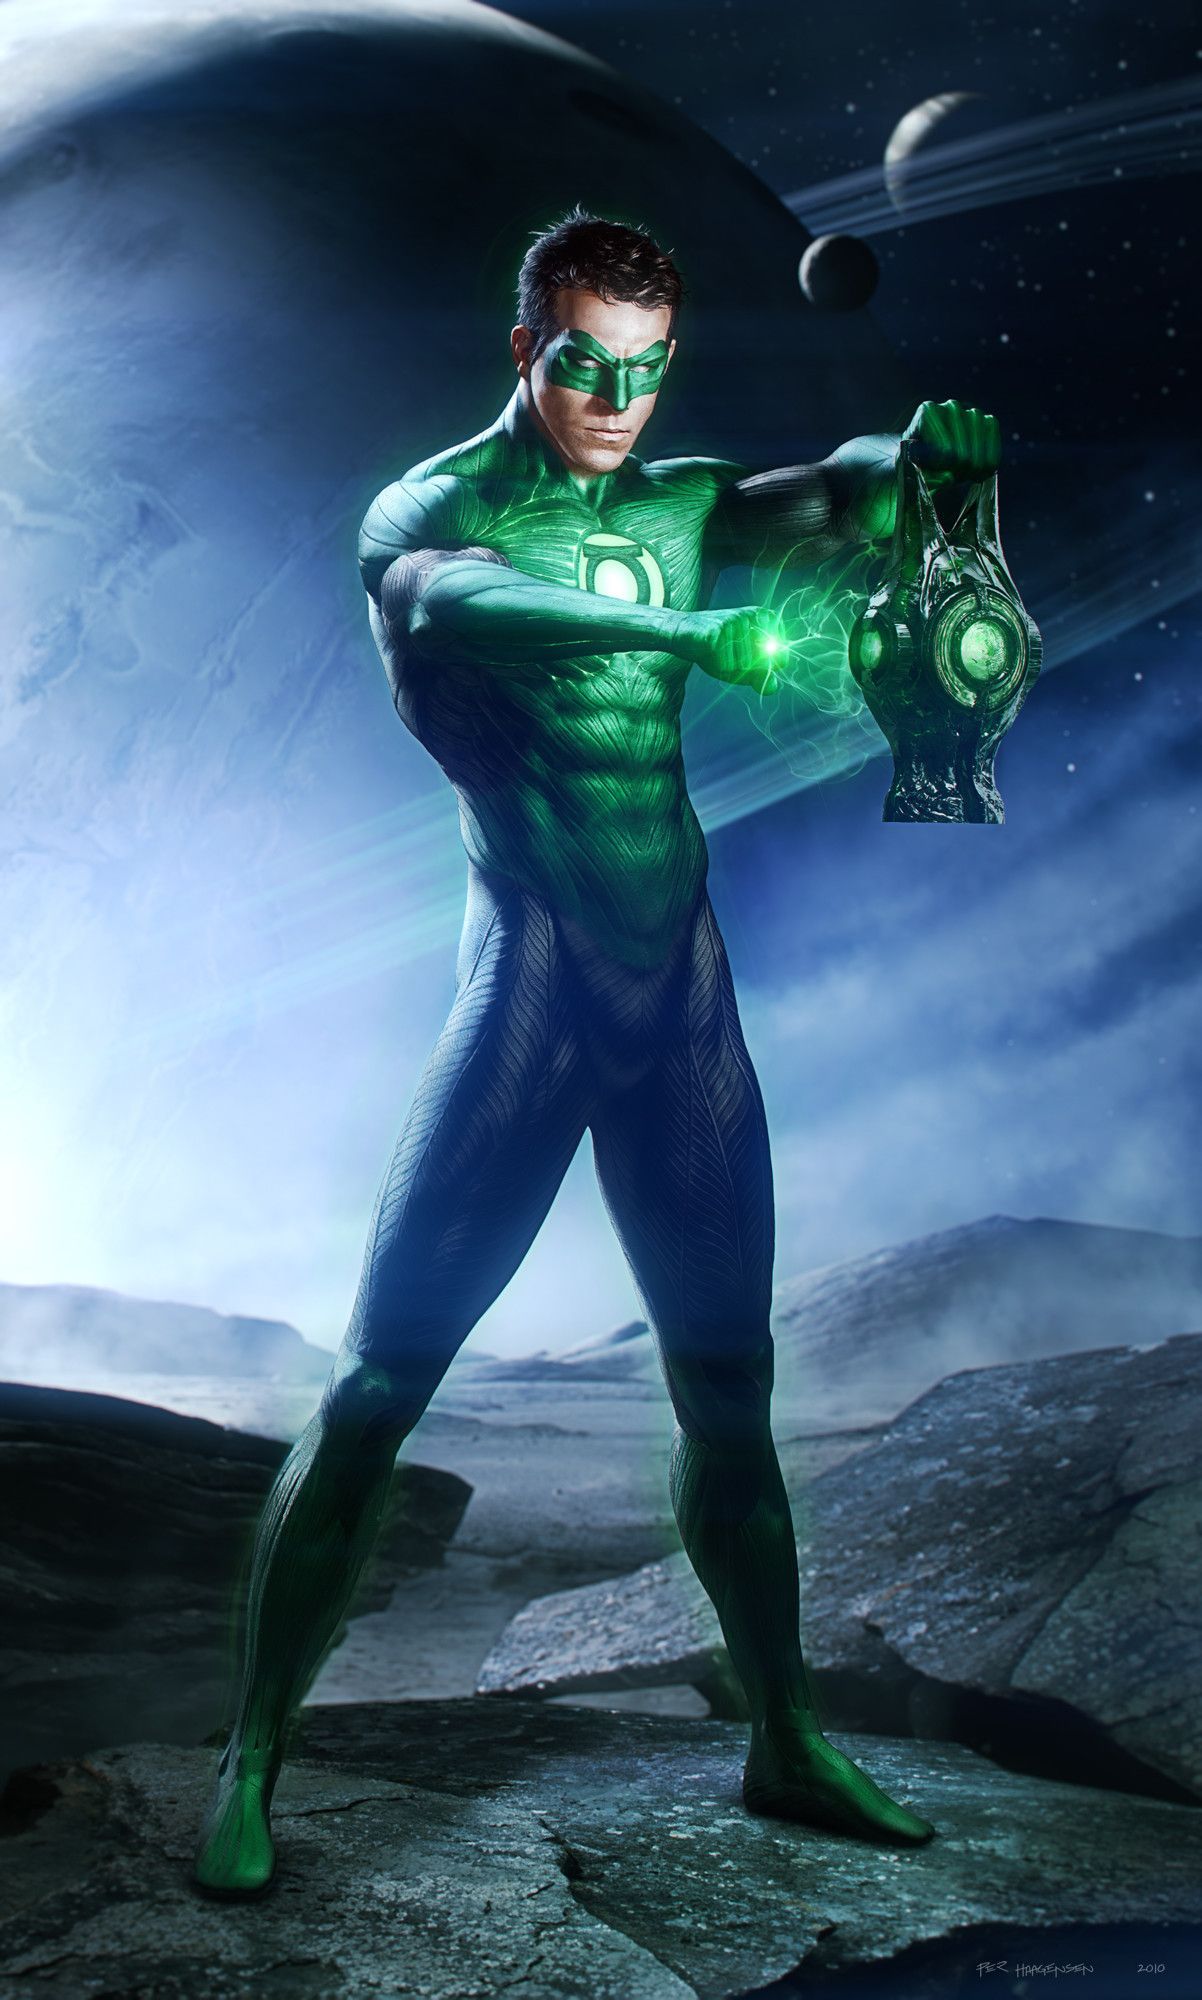 Green Lantern (2011) Artwork Featuring Hal Jordan & Kilowog. Green lantern movie, Green lantern, Green lantern comics